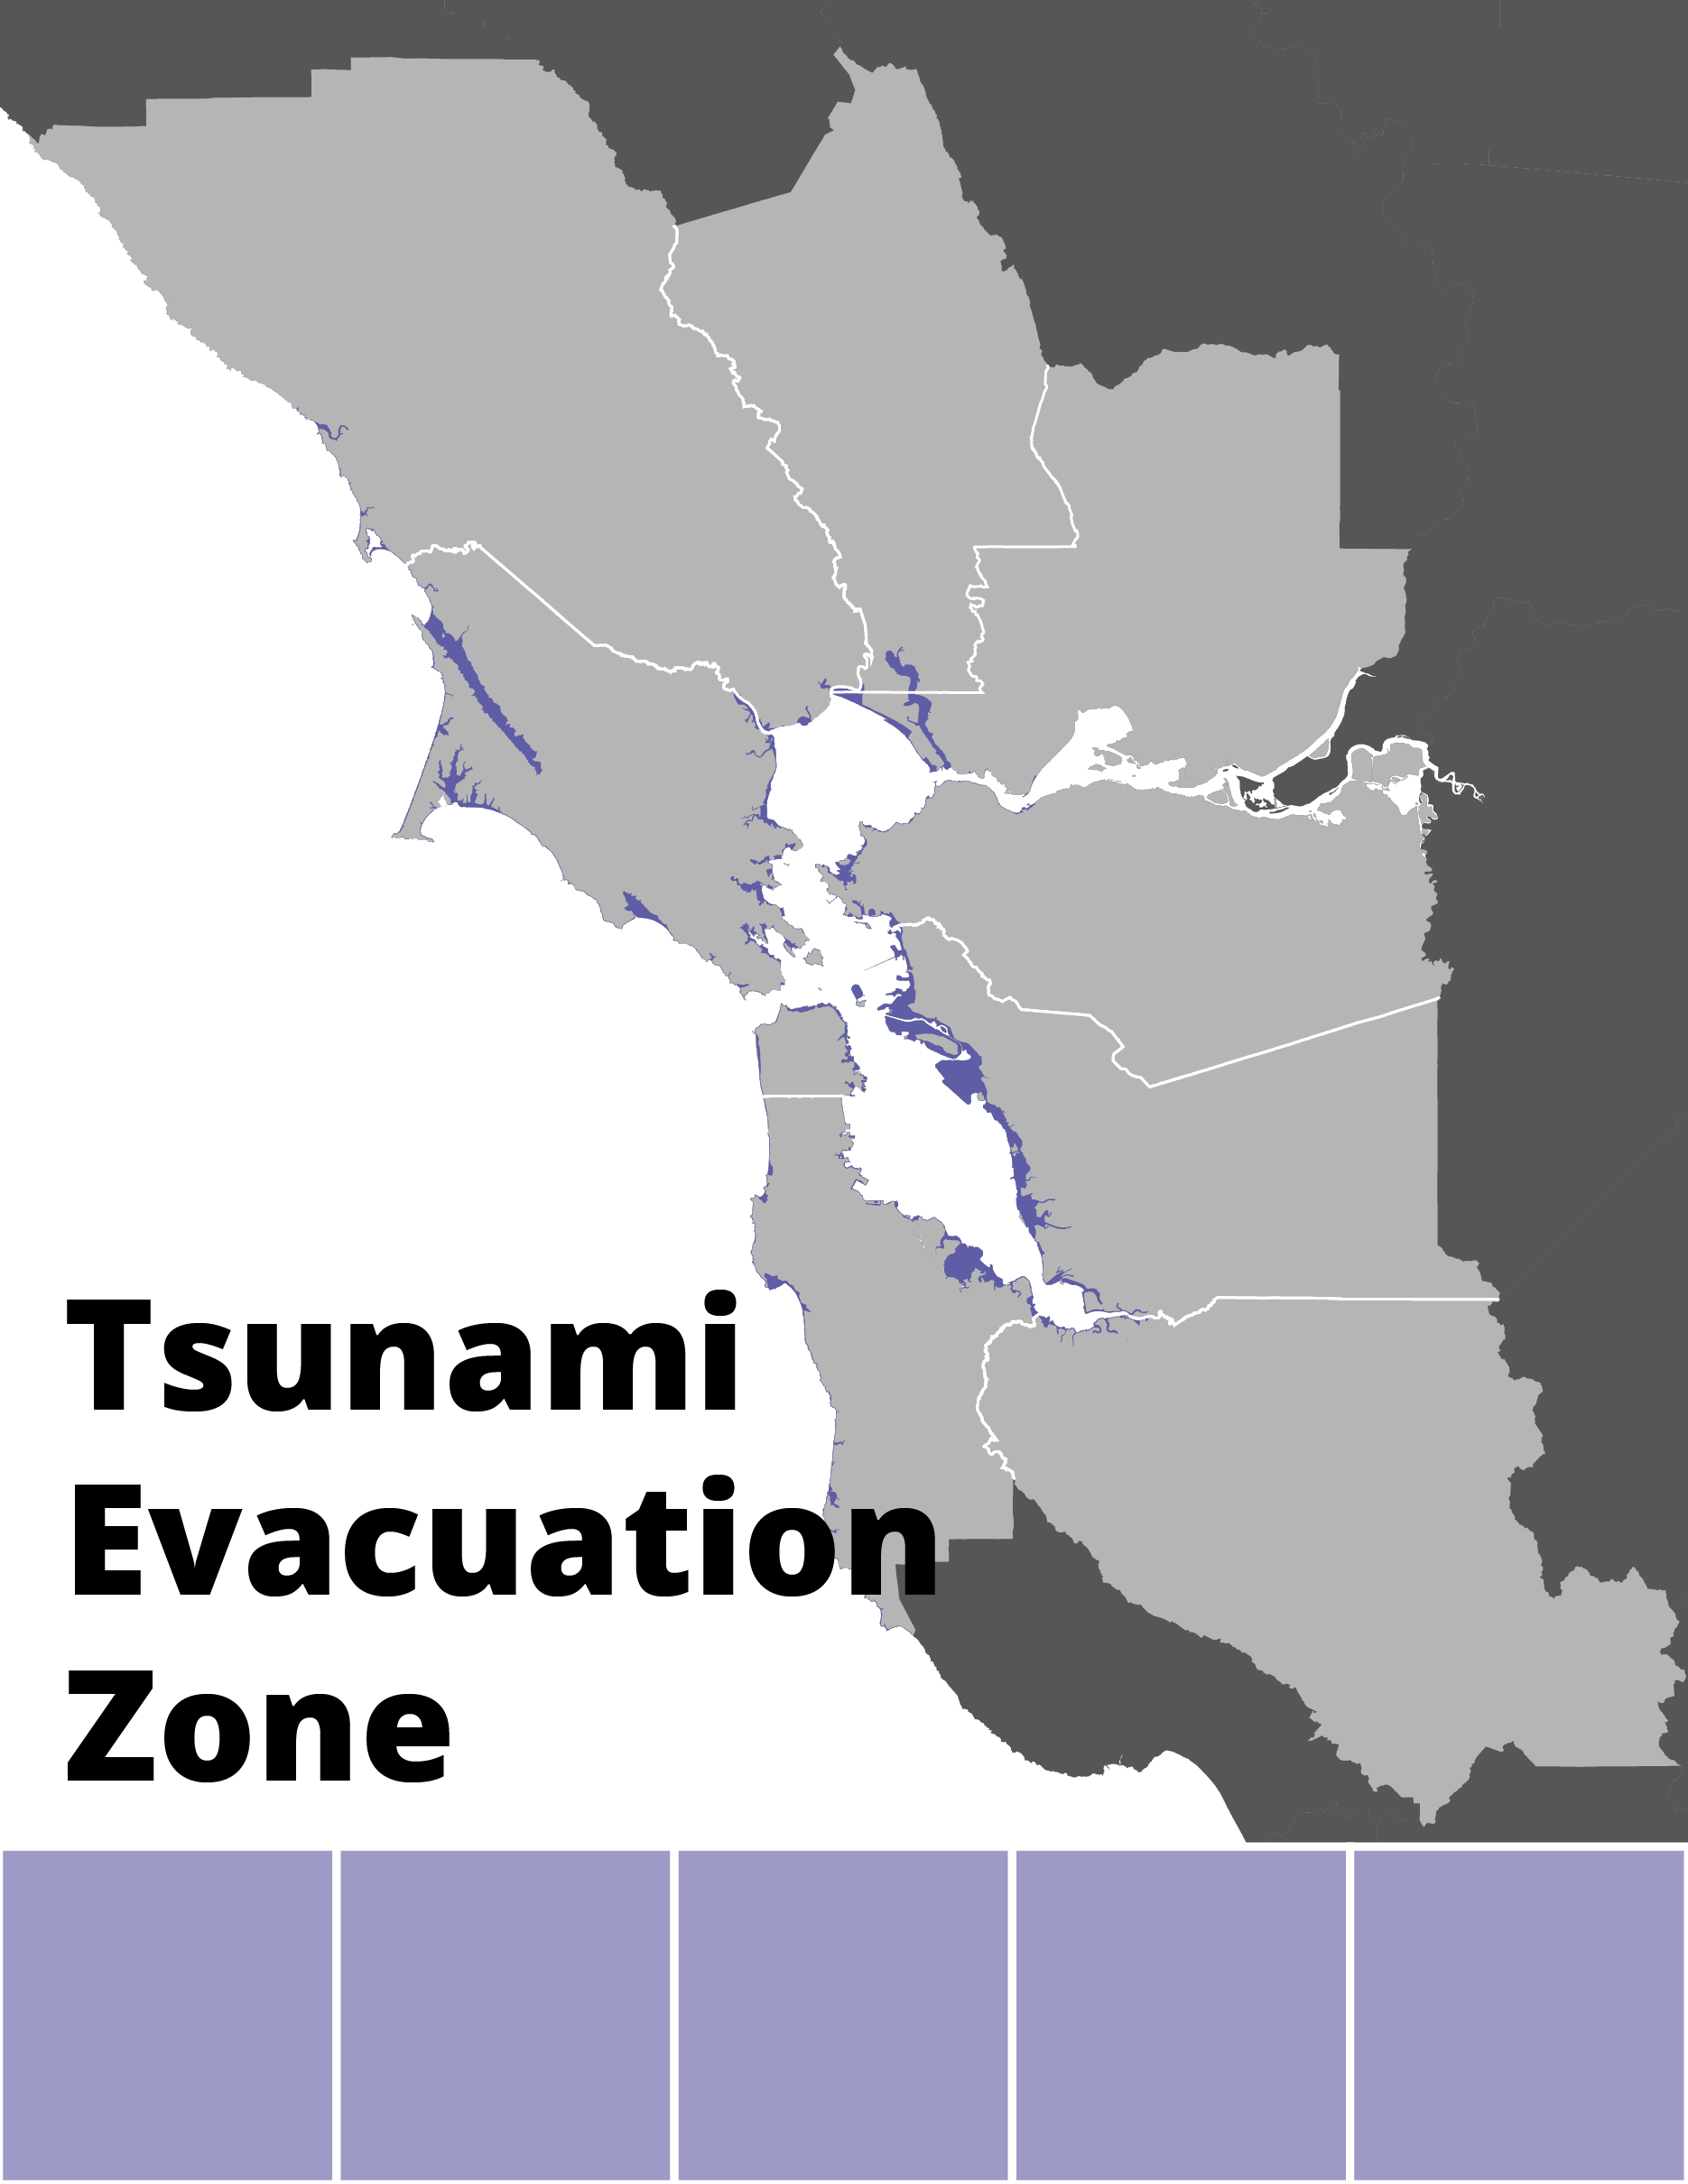 Tsunami Inundation Map for Coastal Evacuation